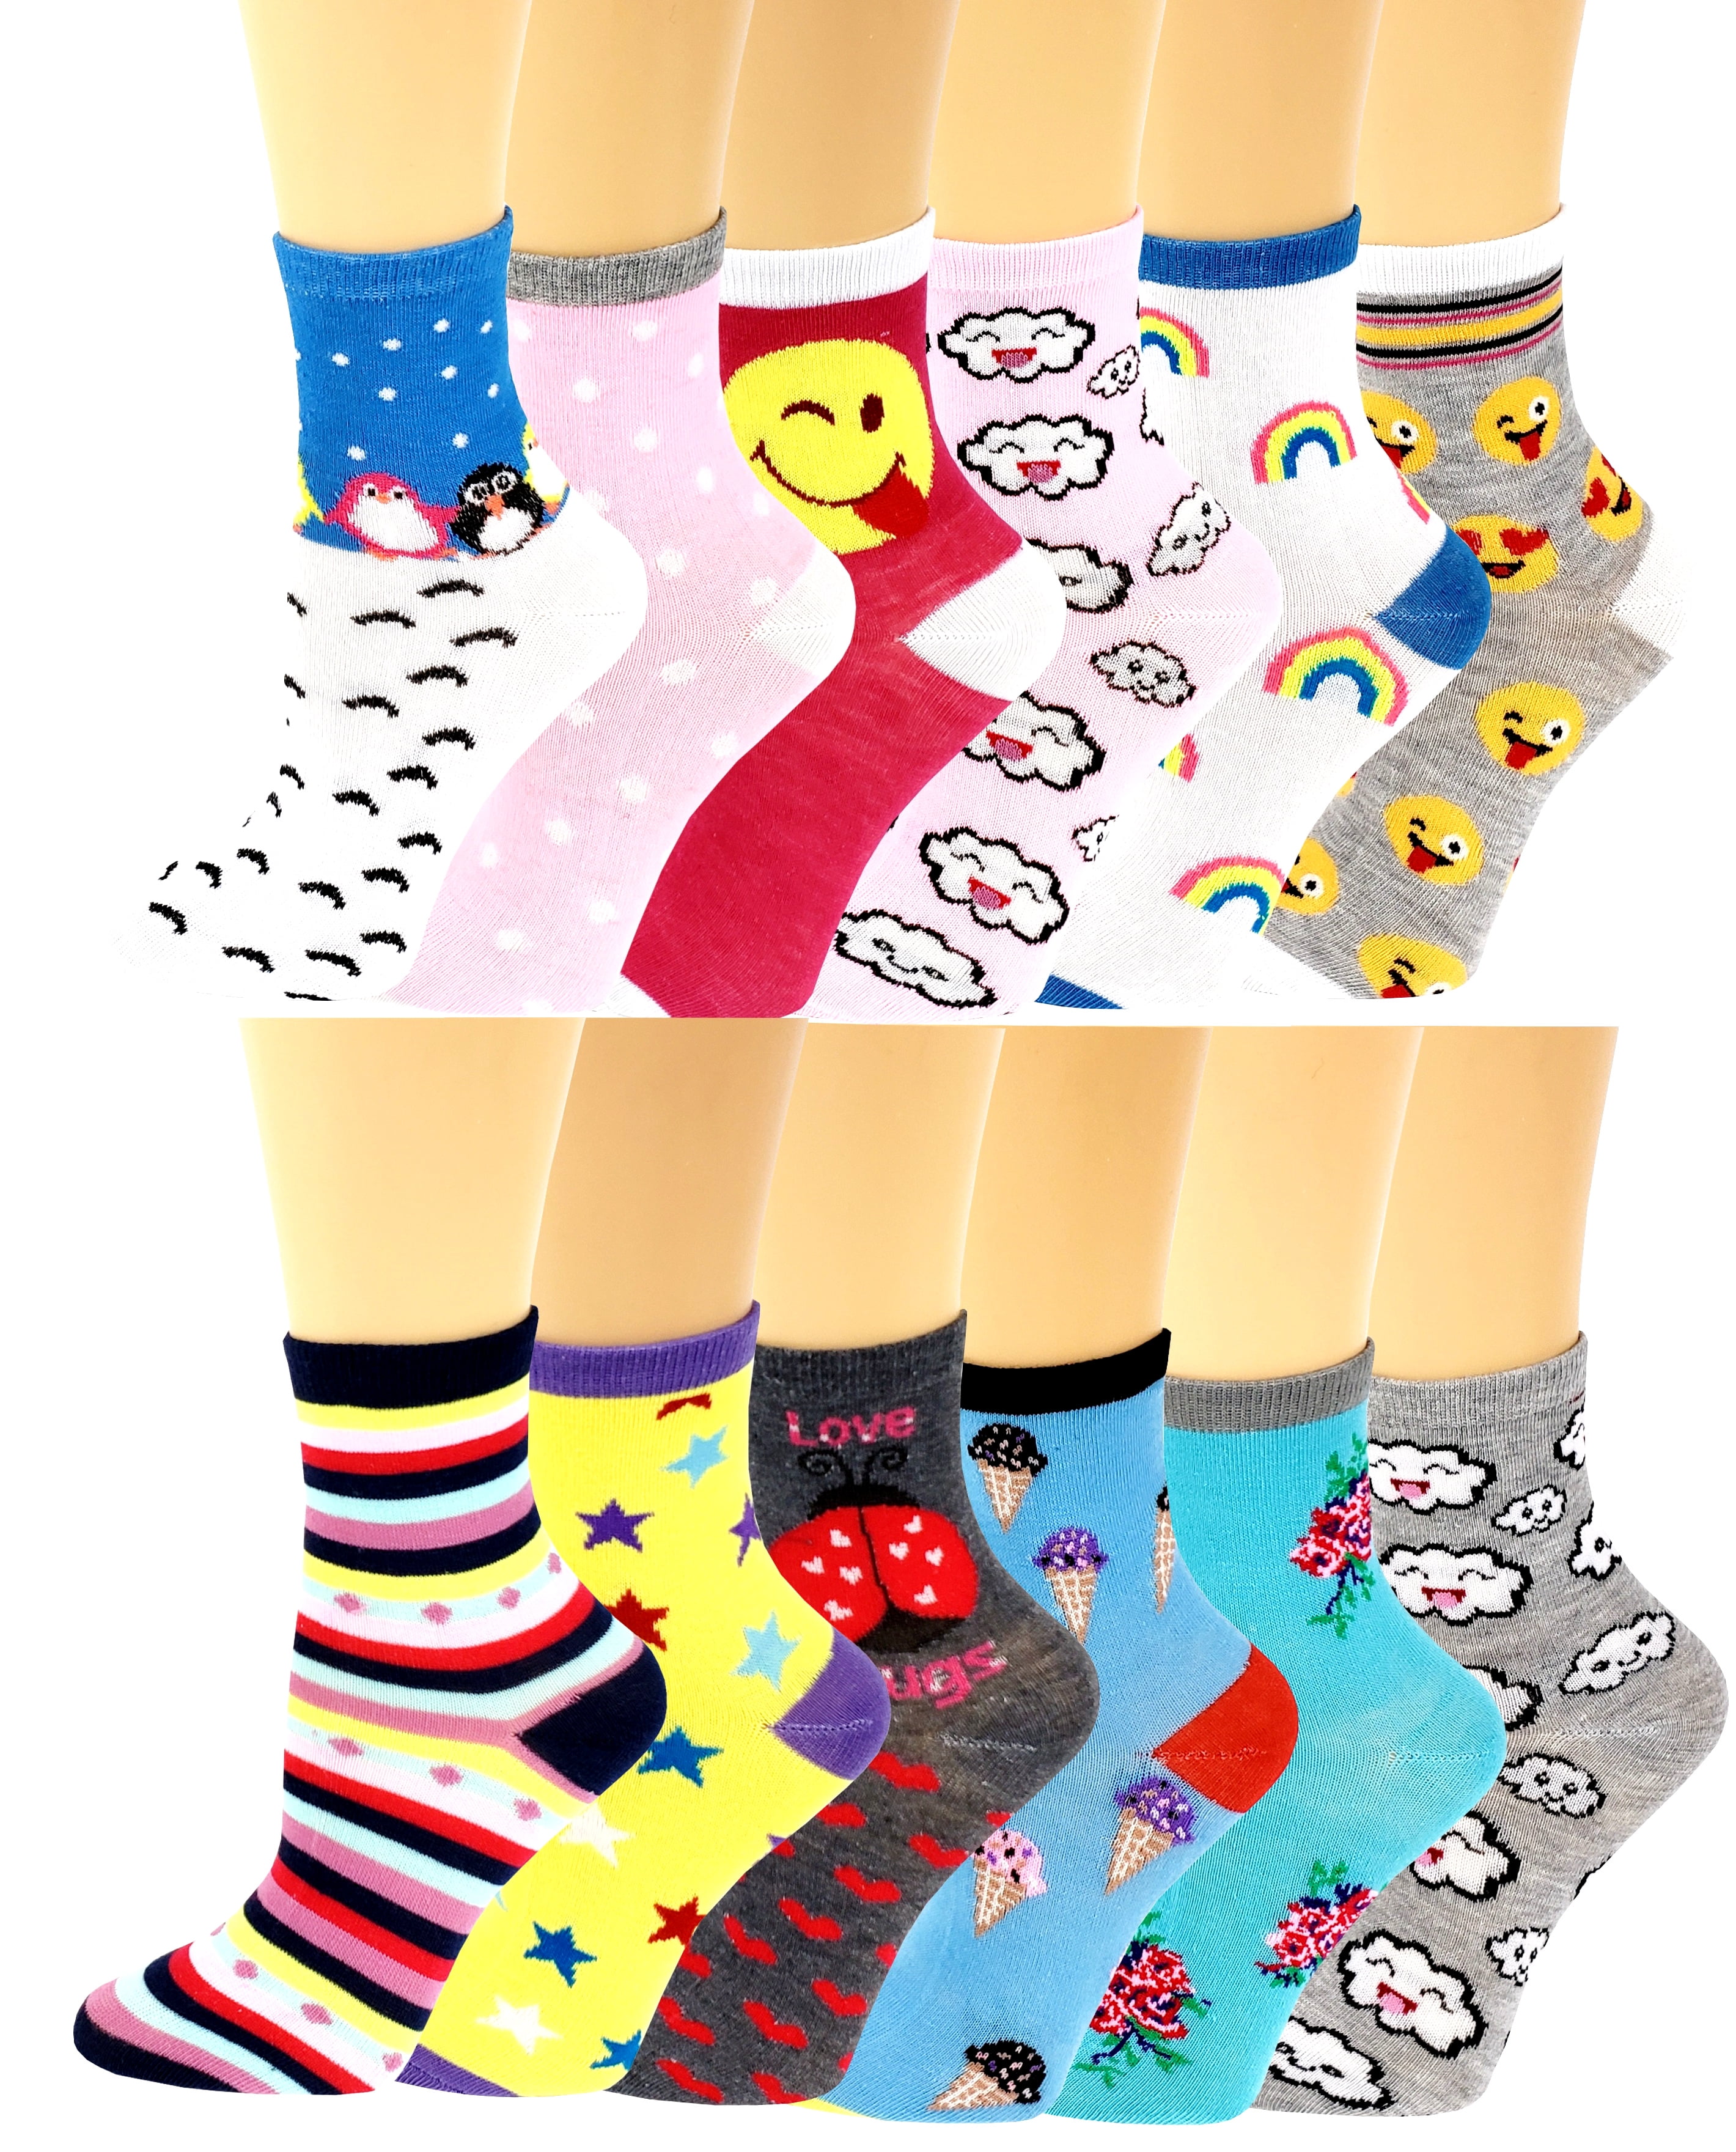 Cat Unisex Funny Casual Crew Socks Athletic Socks For Boys Girls Kids Teenagers